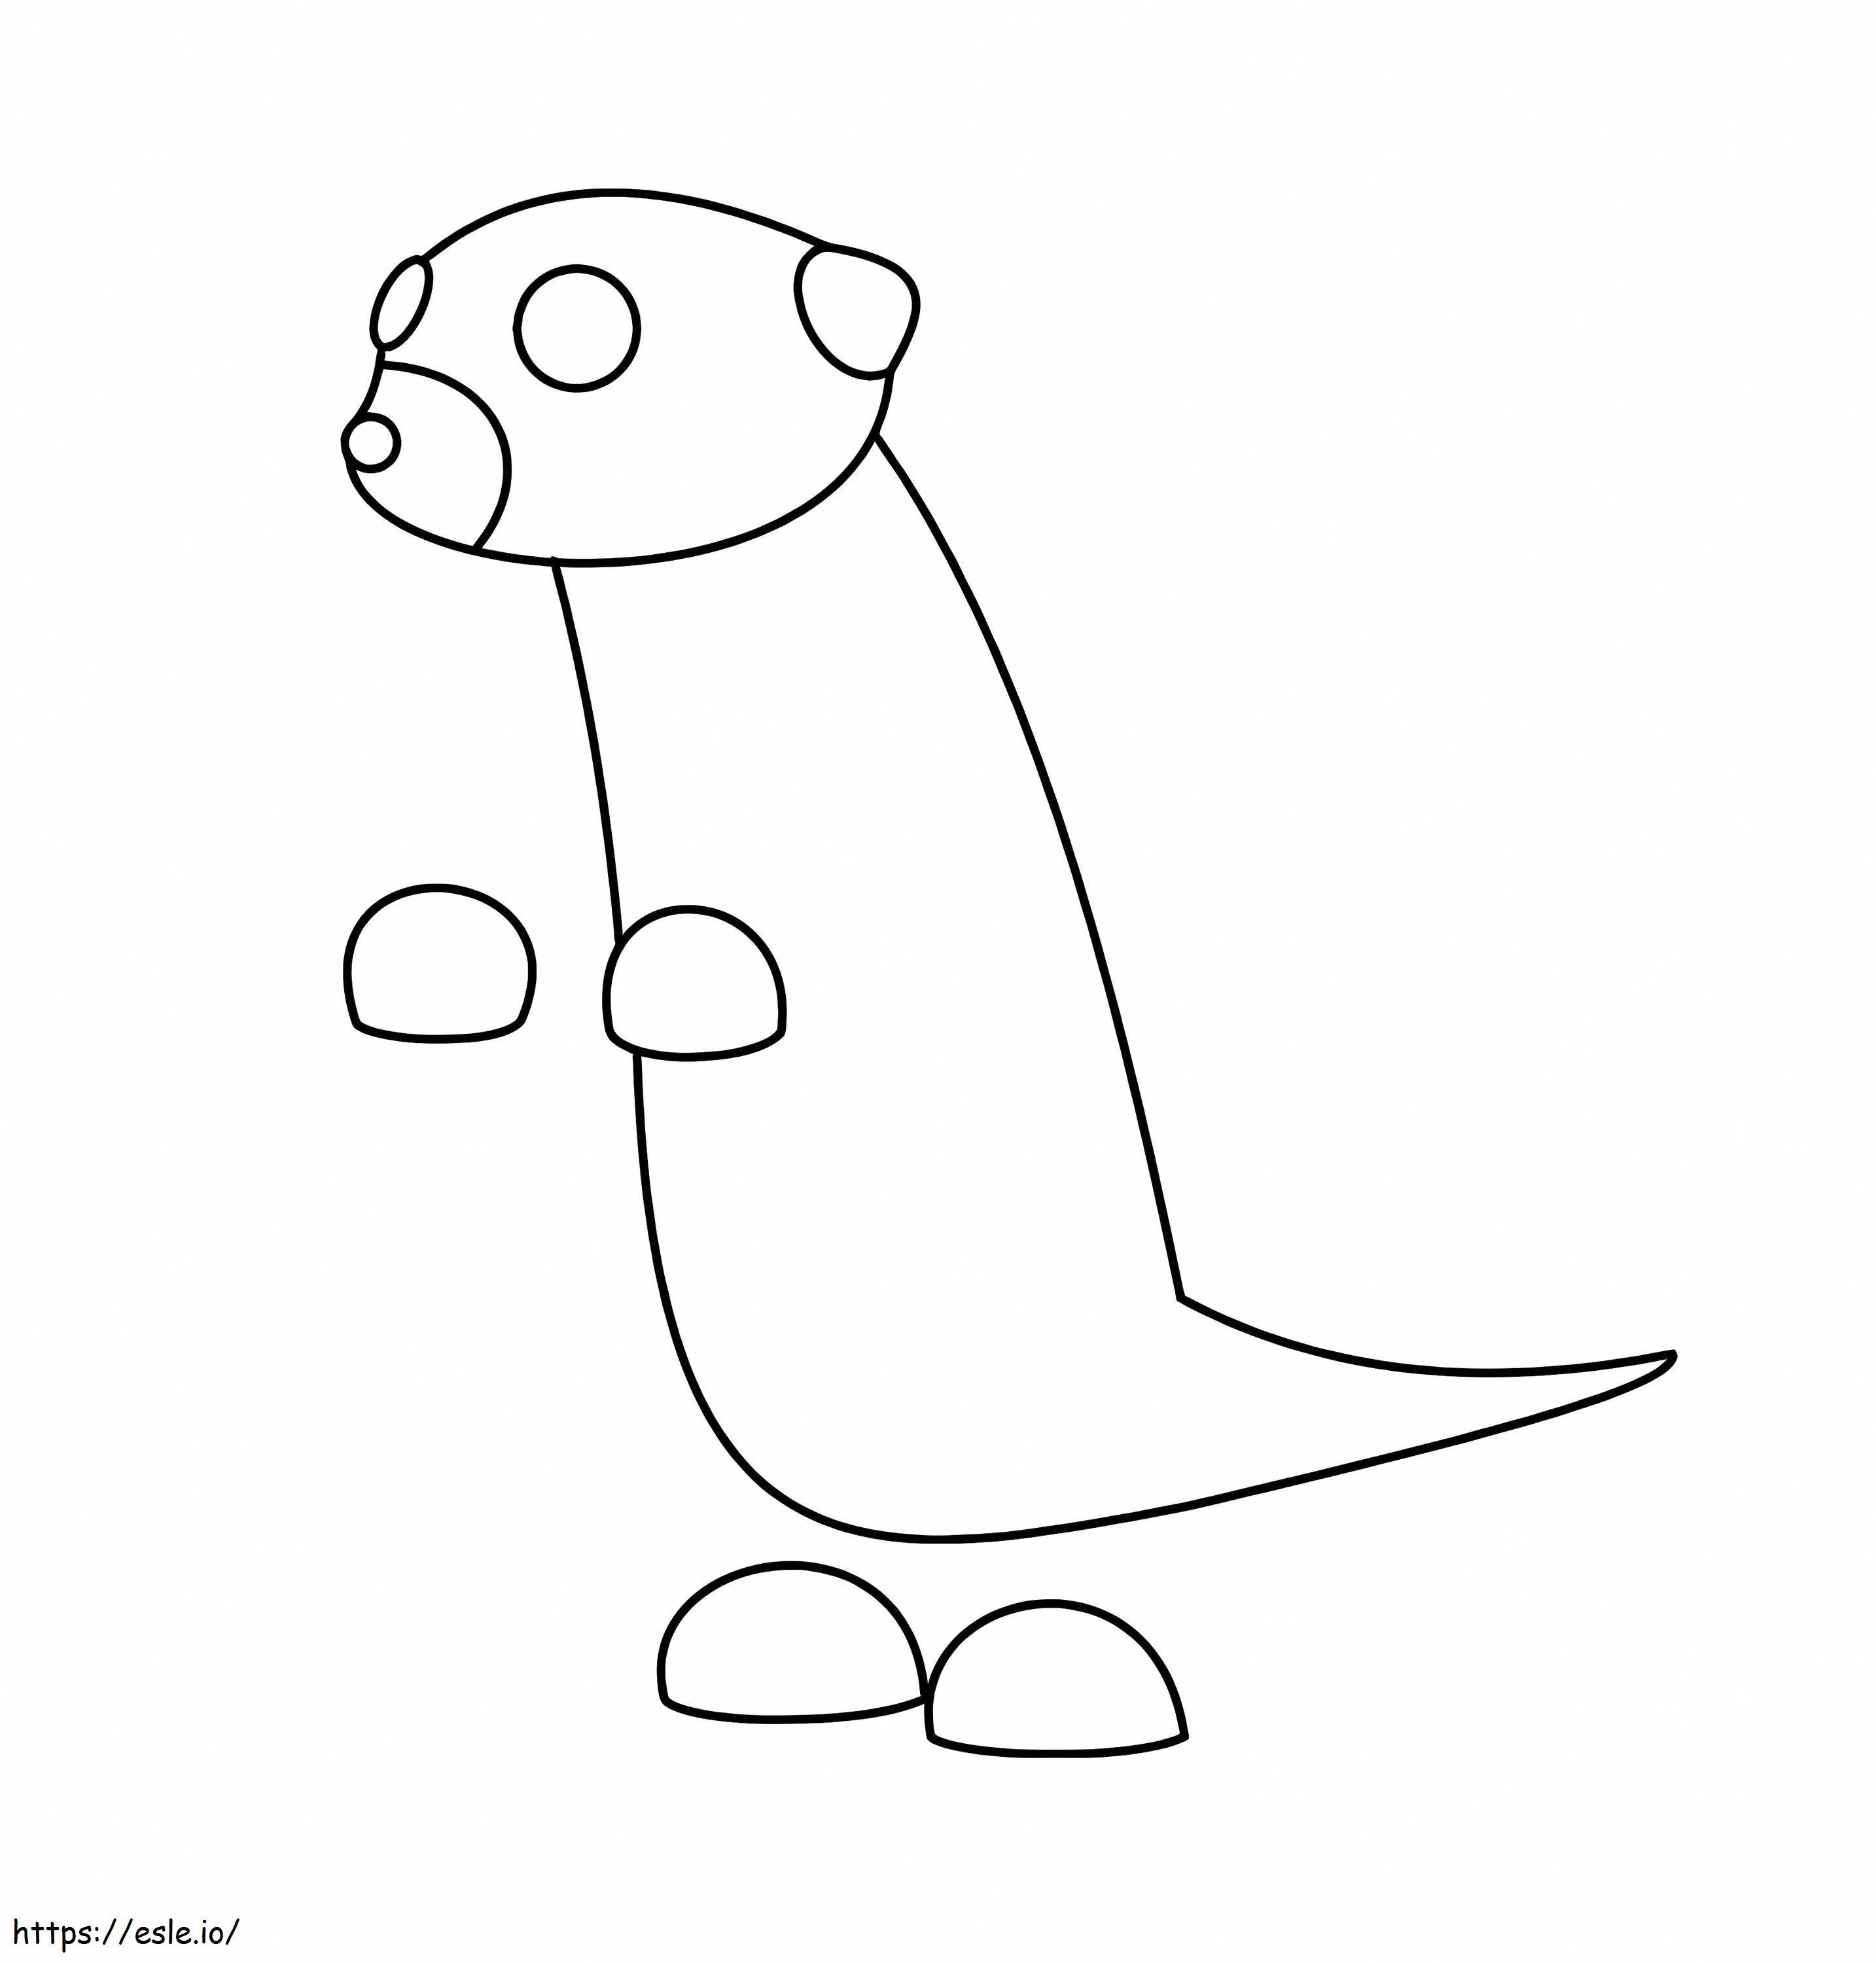 Meerkat Adopt Me coloring page